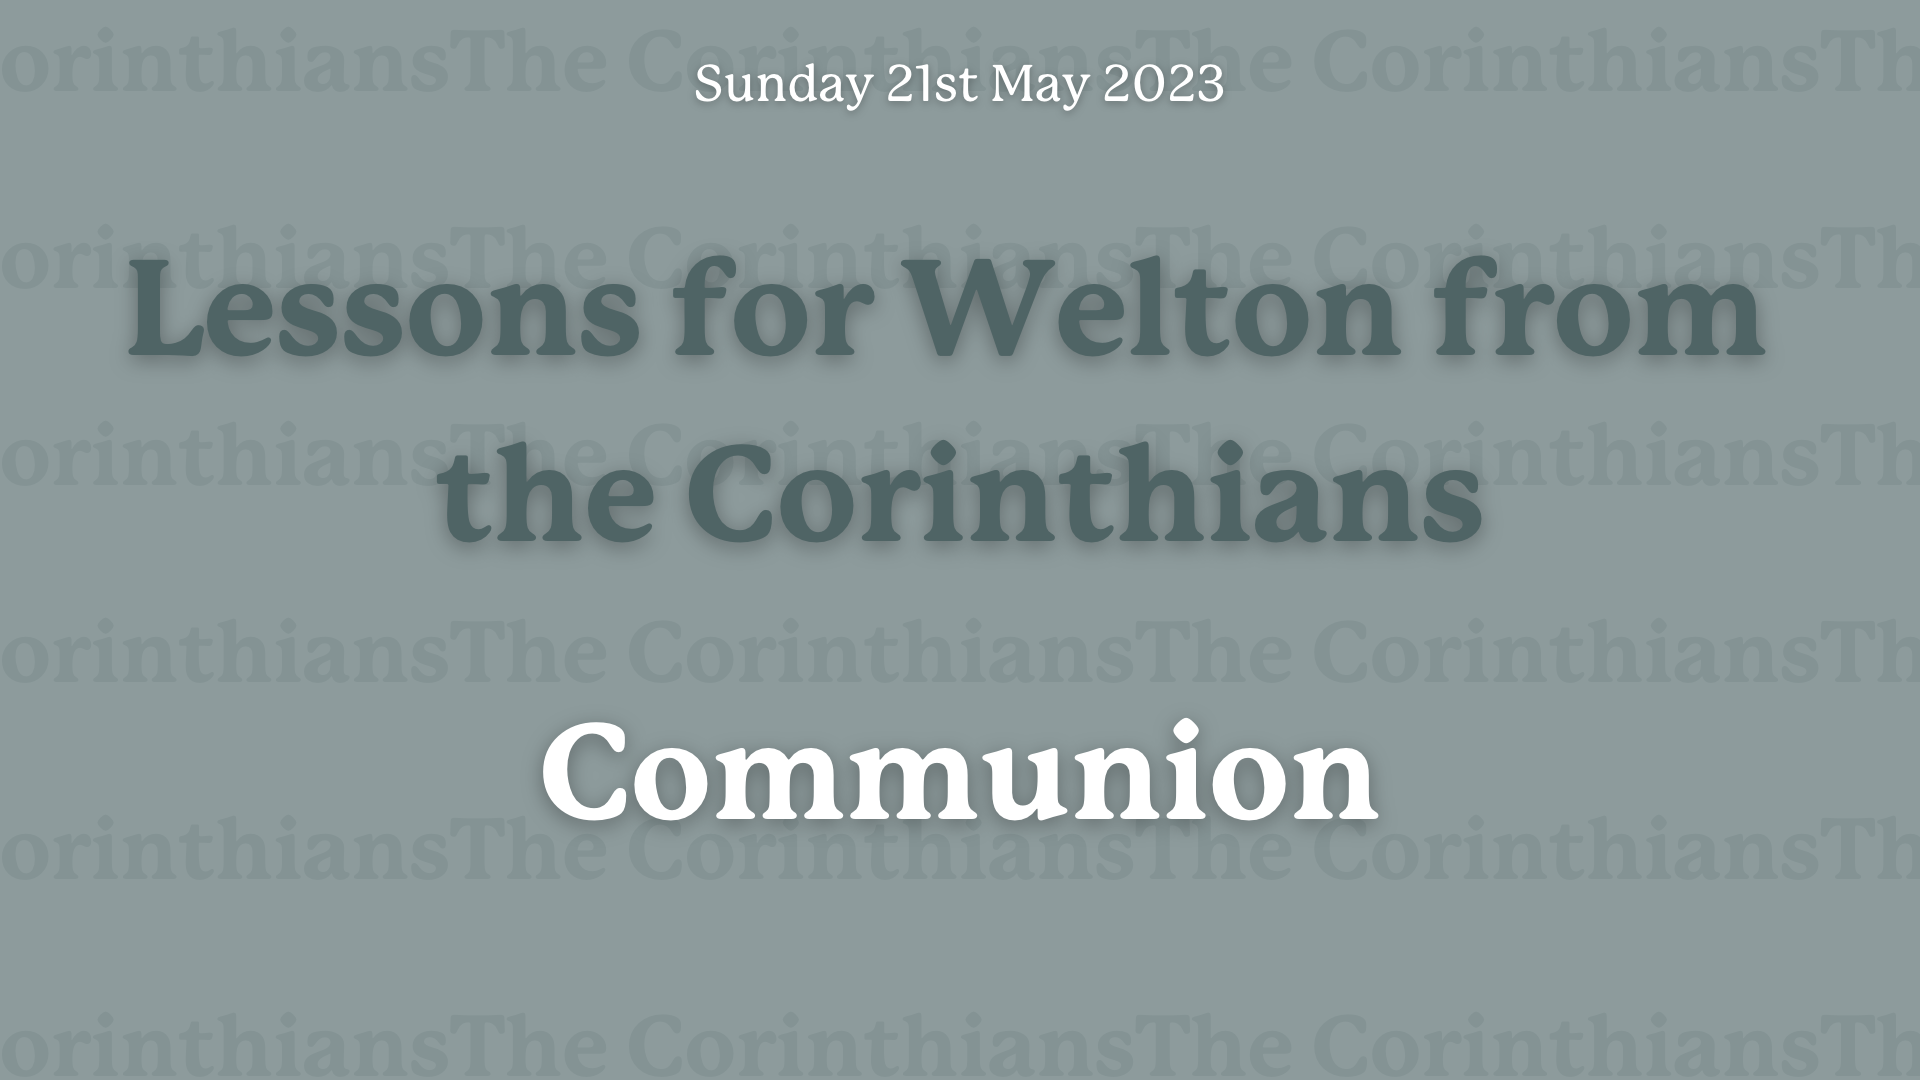 Sunday Service - Communion